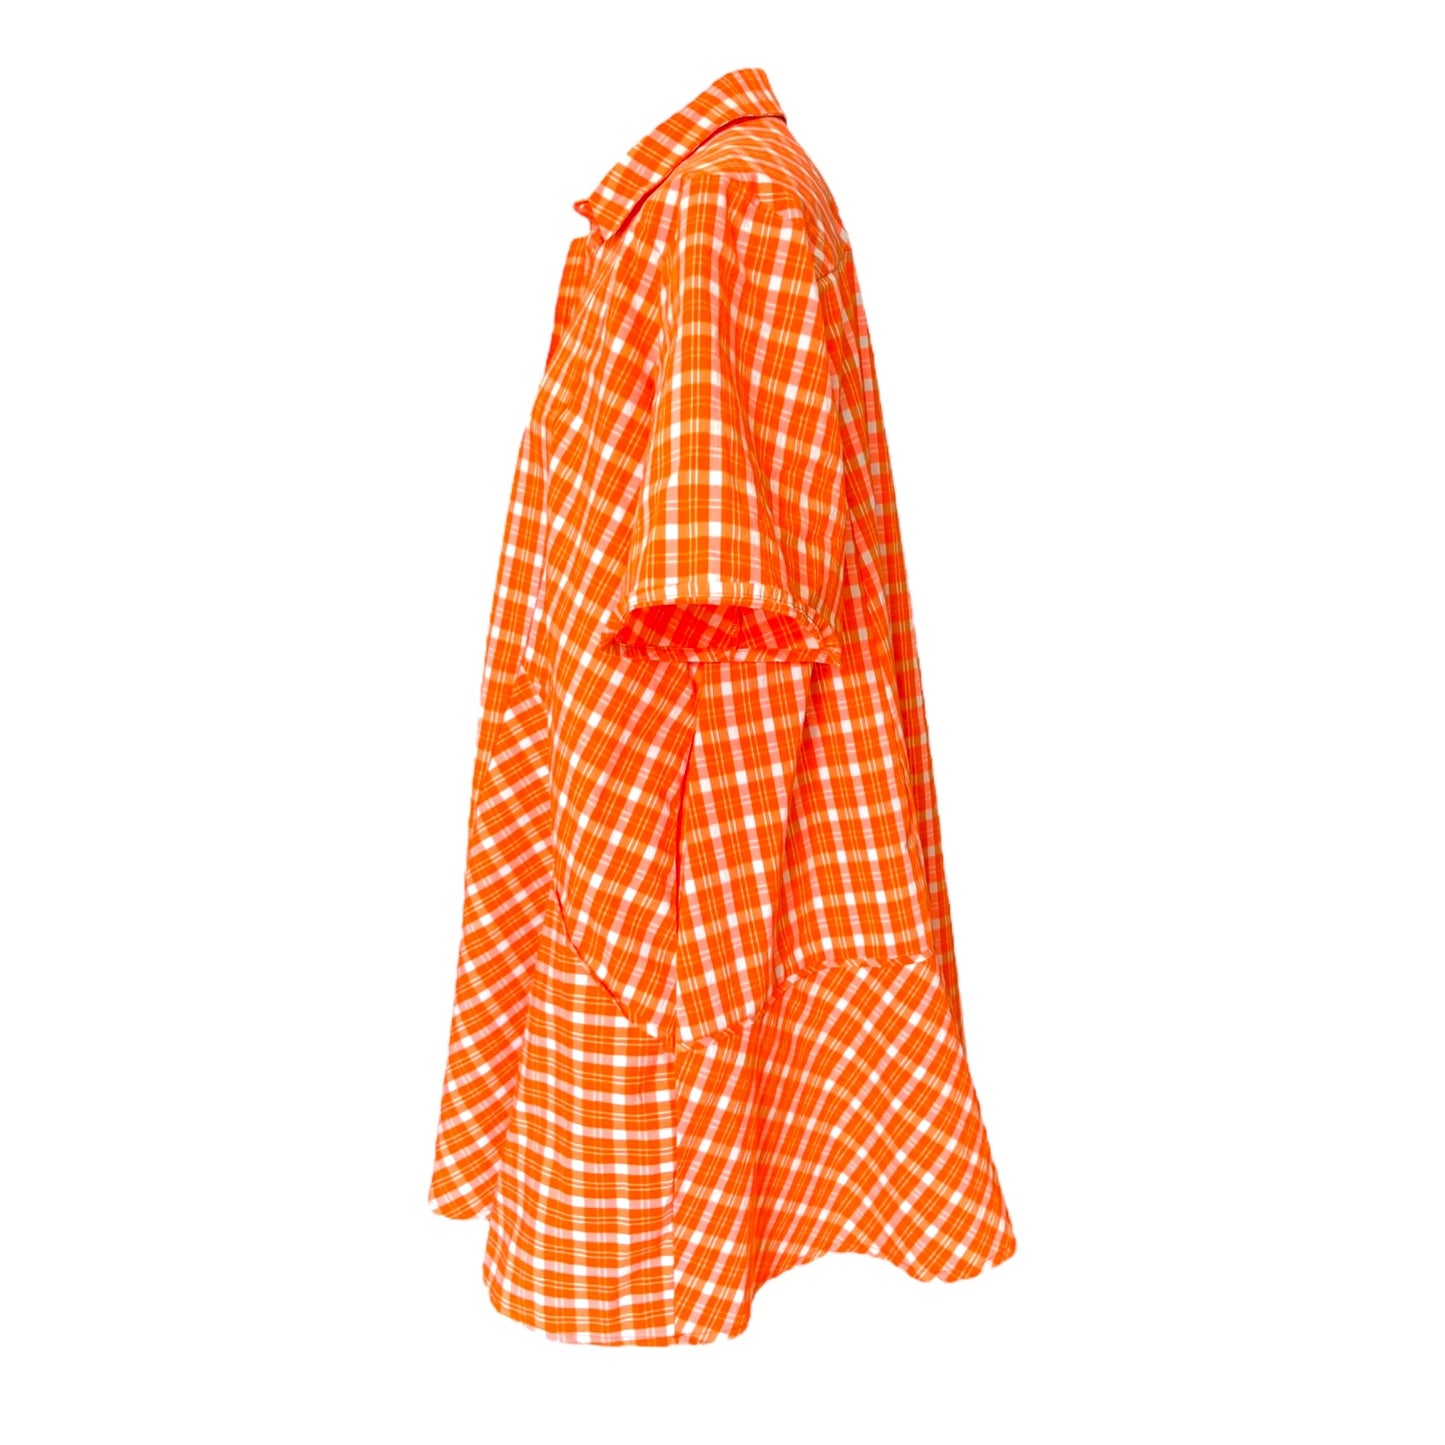 Exquise Neon Orange Dress - 10